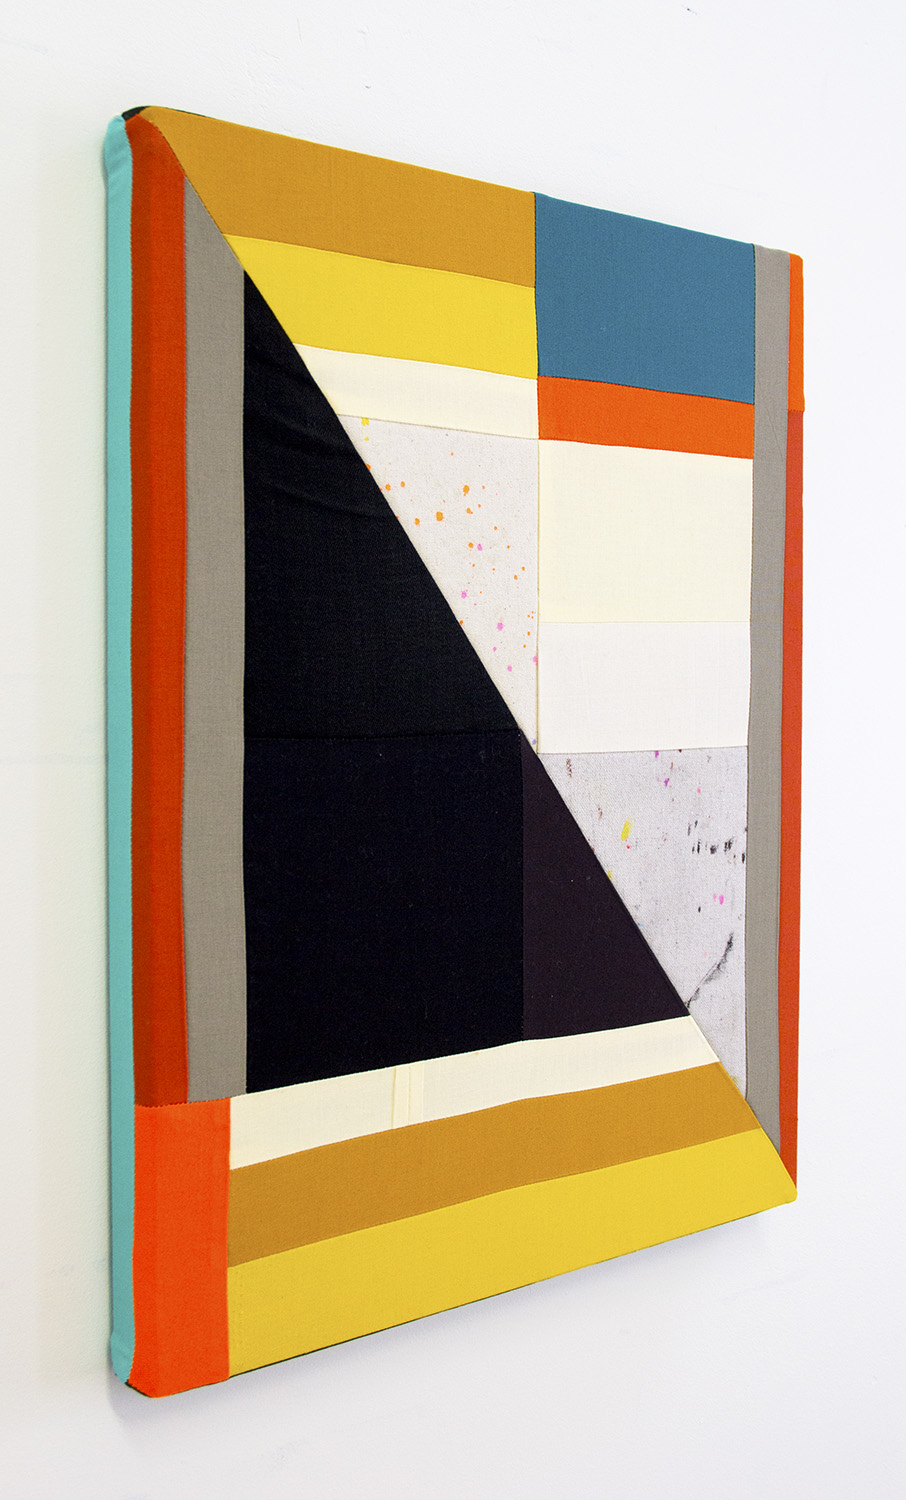    of Color, No. 1 (side view)   ,  2019 Sewn canvas, cotton, Levi’s denim, acrylic 20 x 16 inches (50.8 x 40.6 cm) 